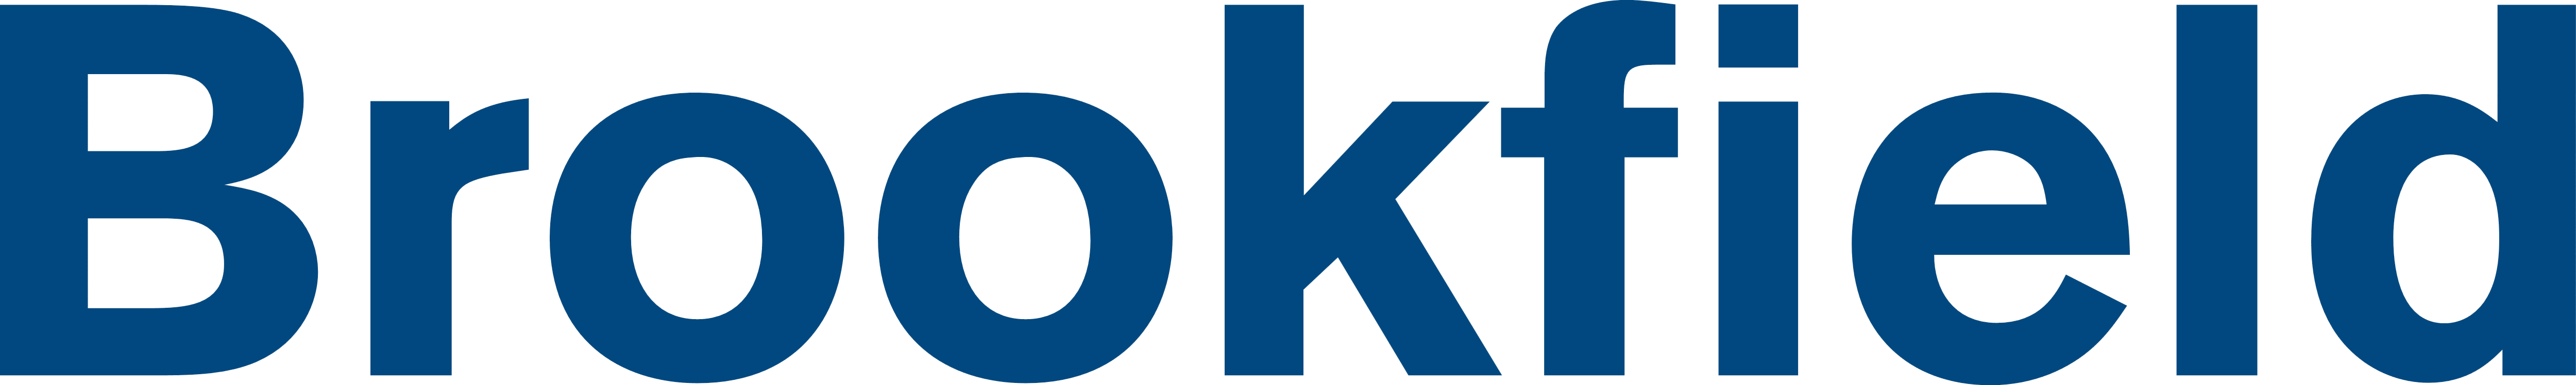 Brooksfield Logo Vector